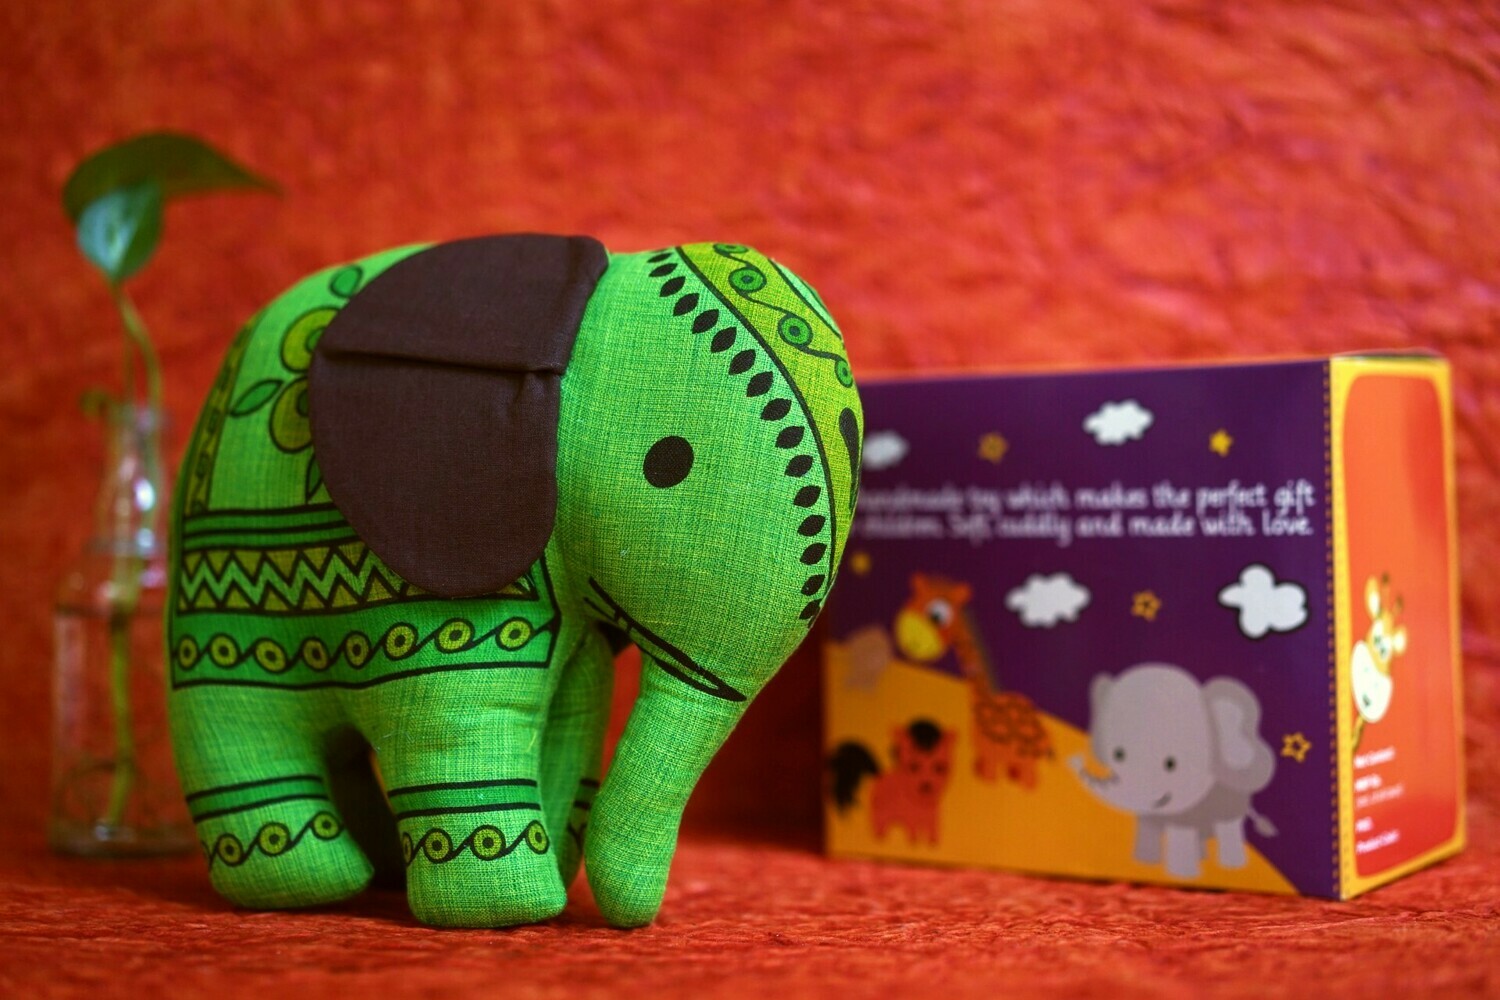 Green Elephant Toy